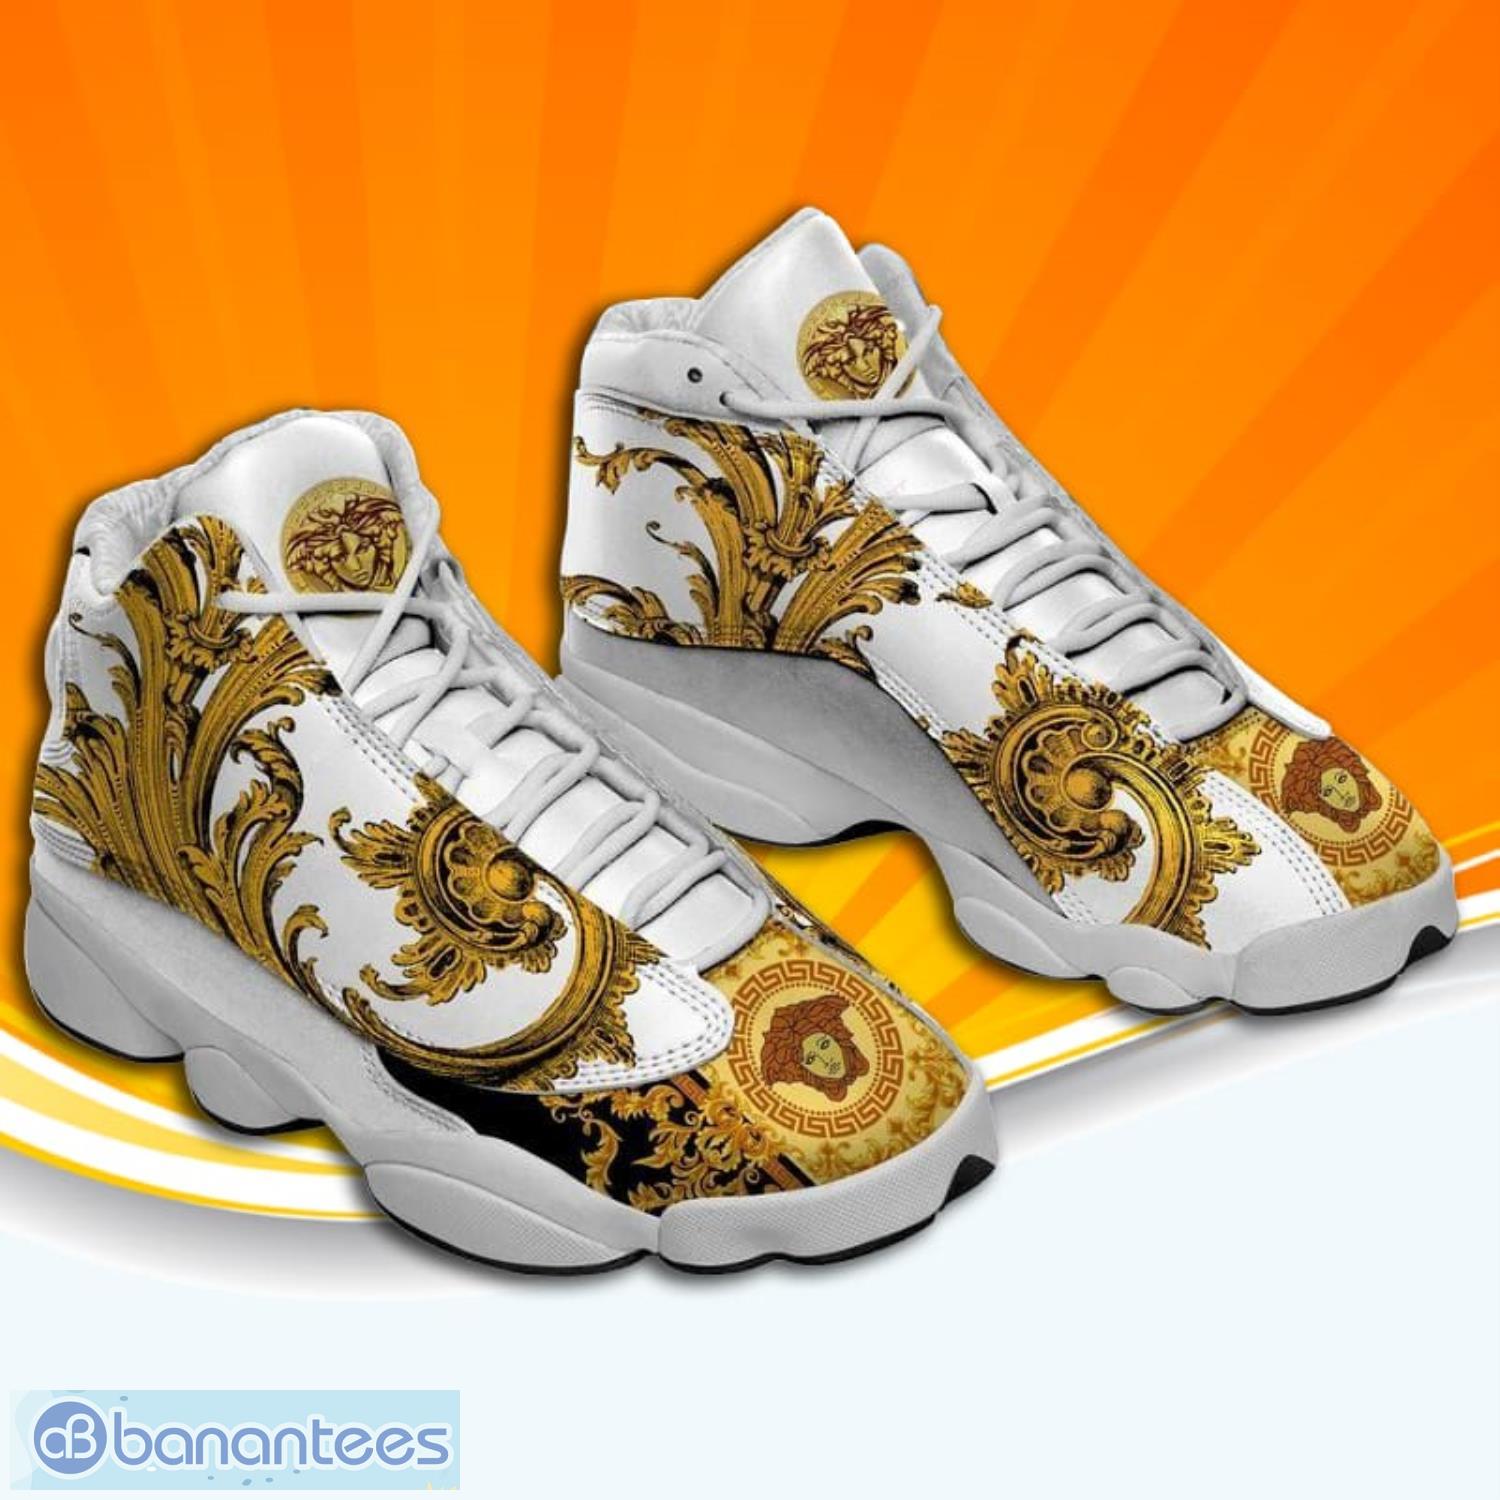 Versace Royal Texture Air Jordan 13 Sneaker Shoes Product Photo 1